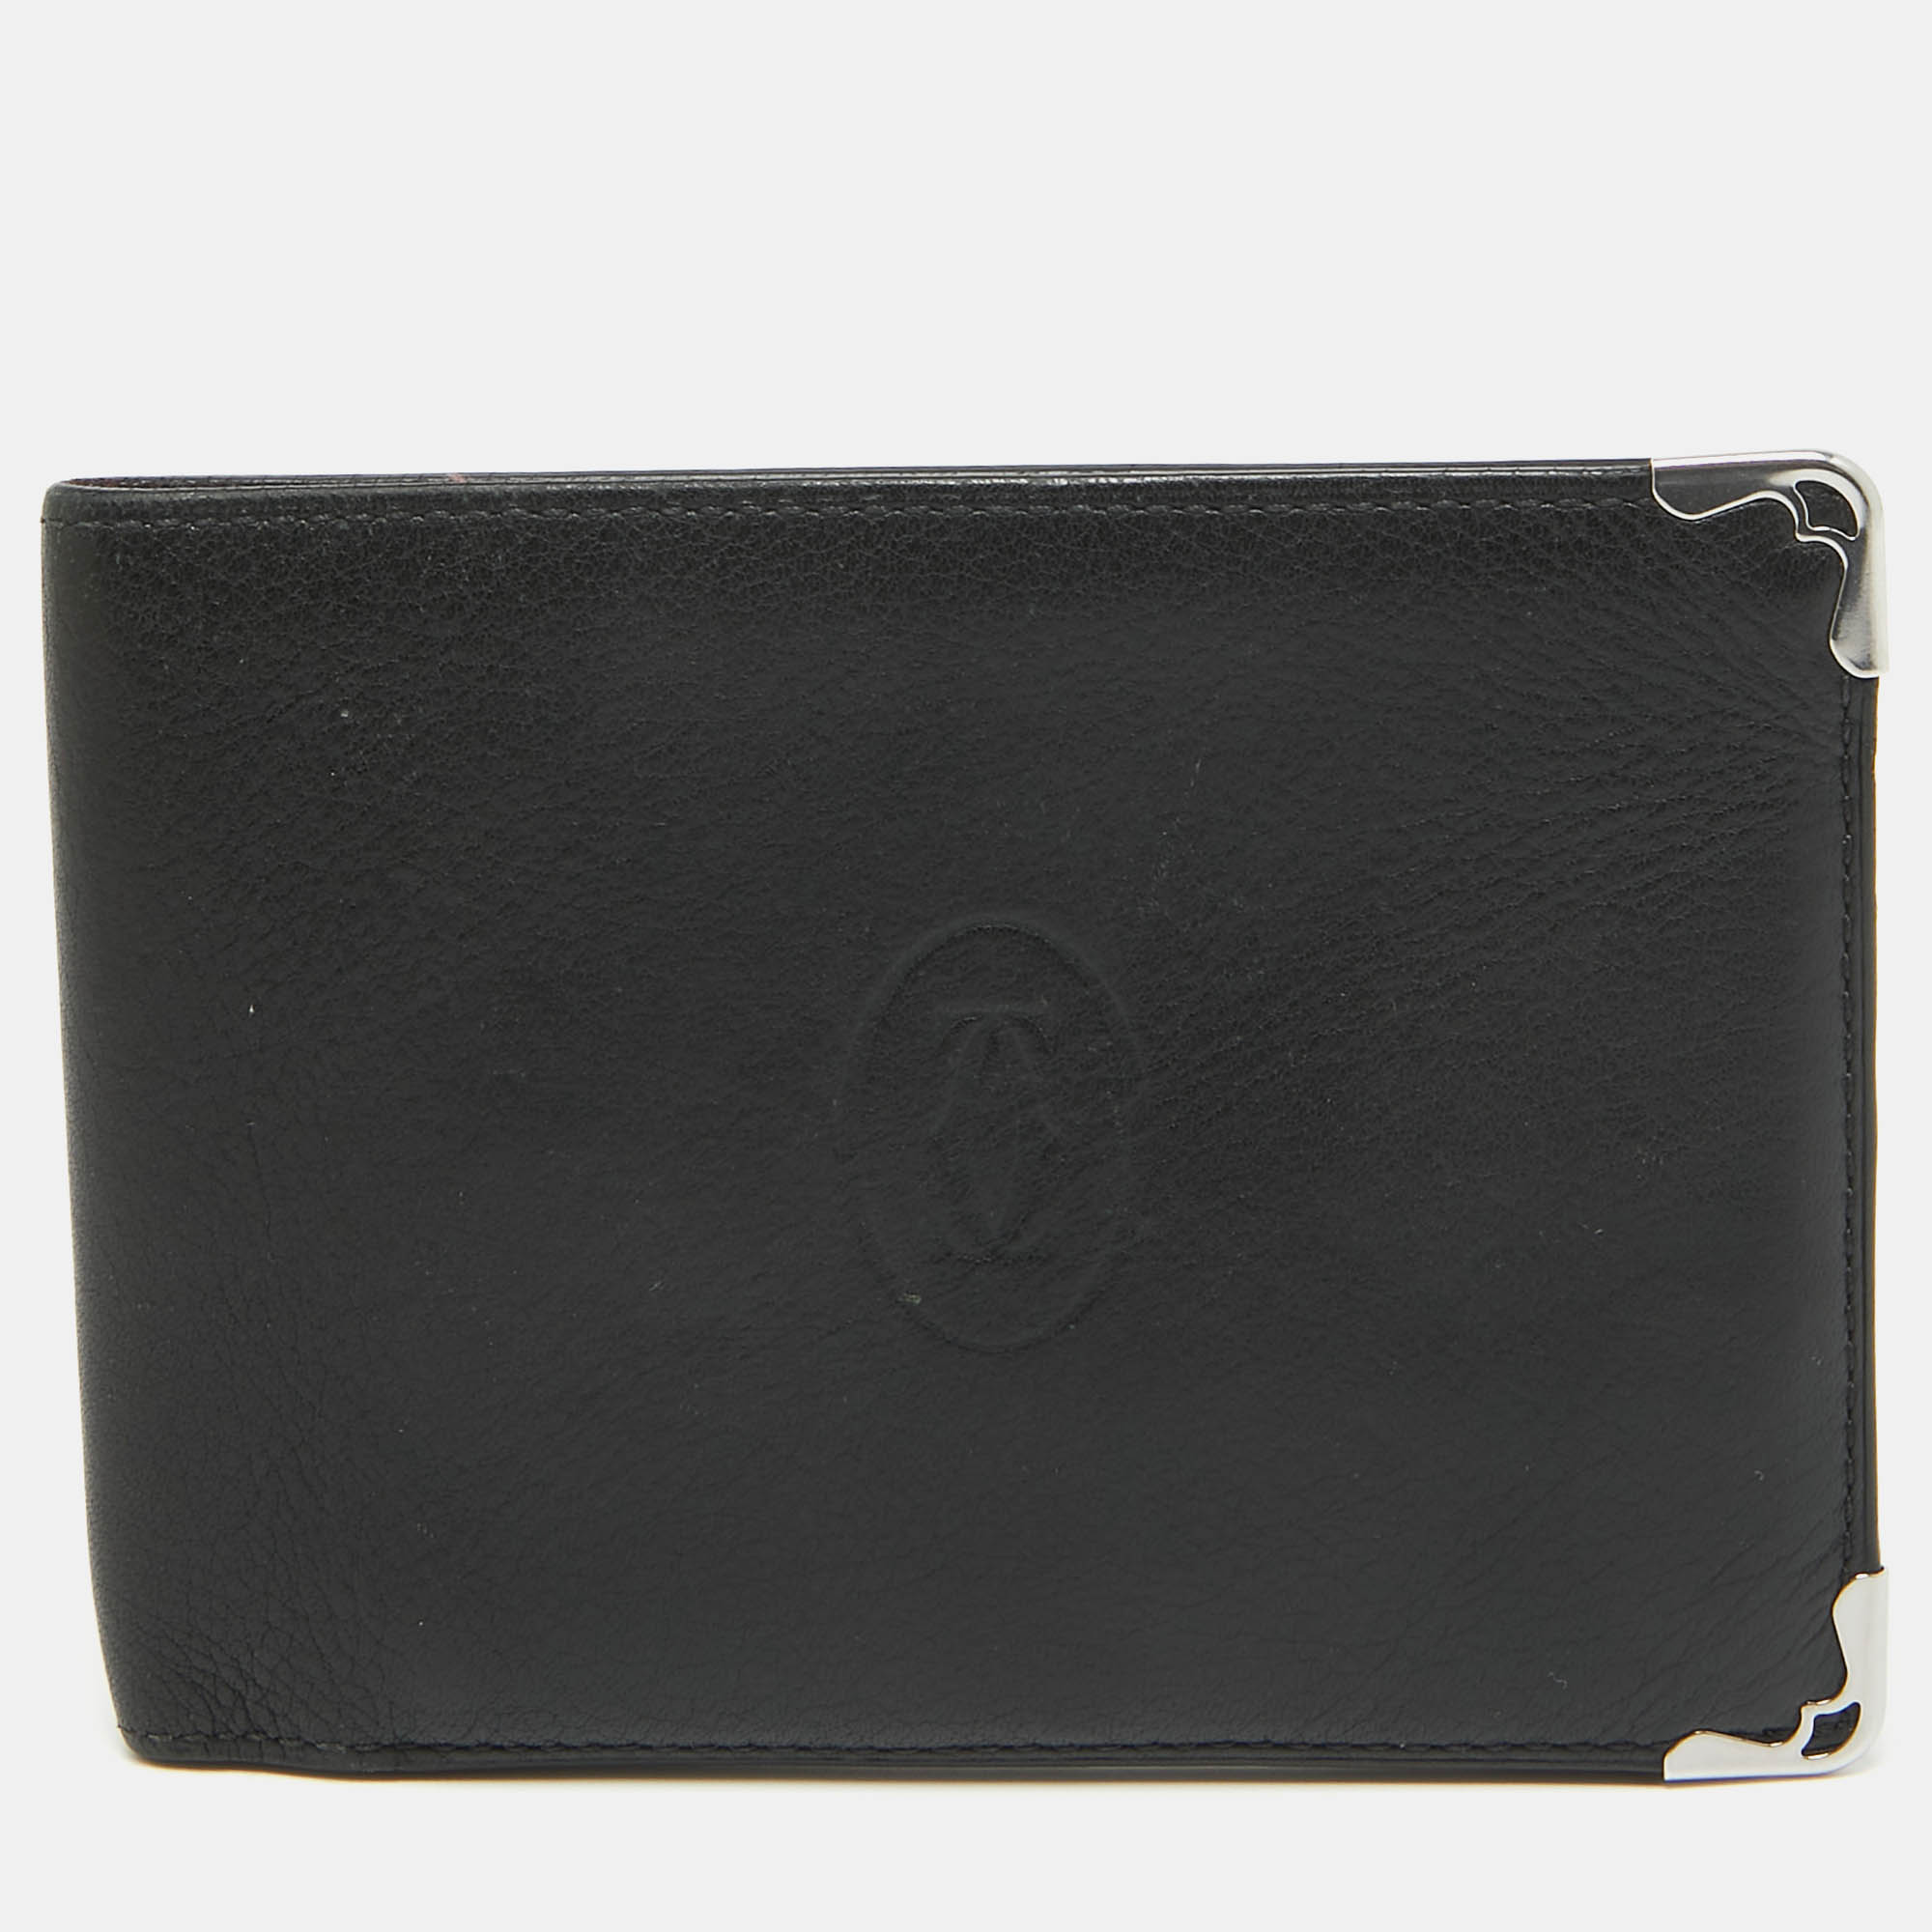 Cartier black leather must de cartier bifold wallet